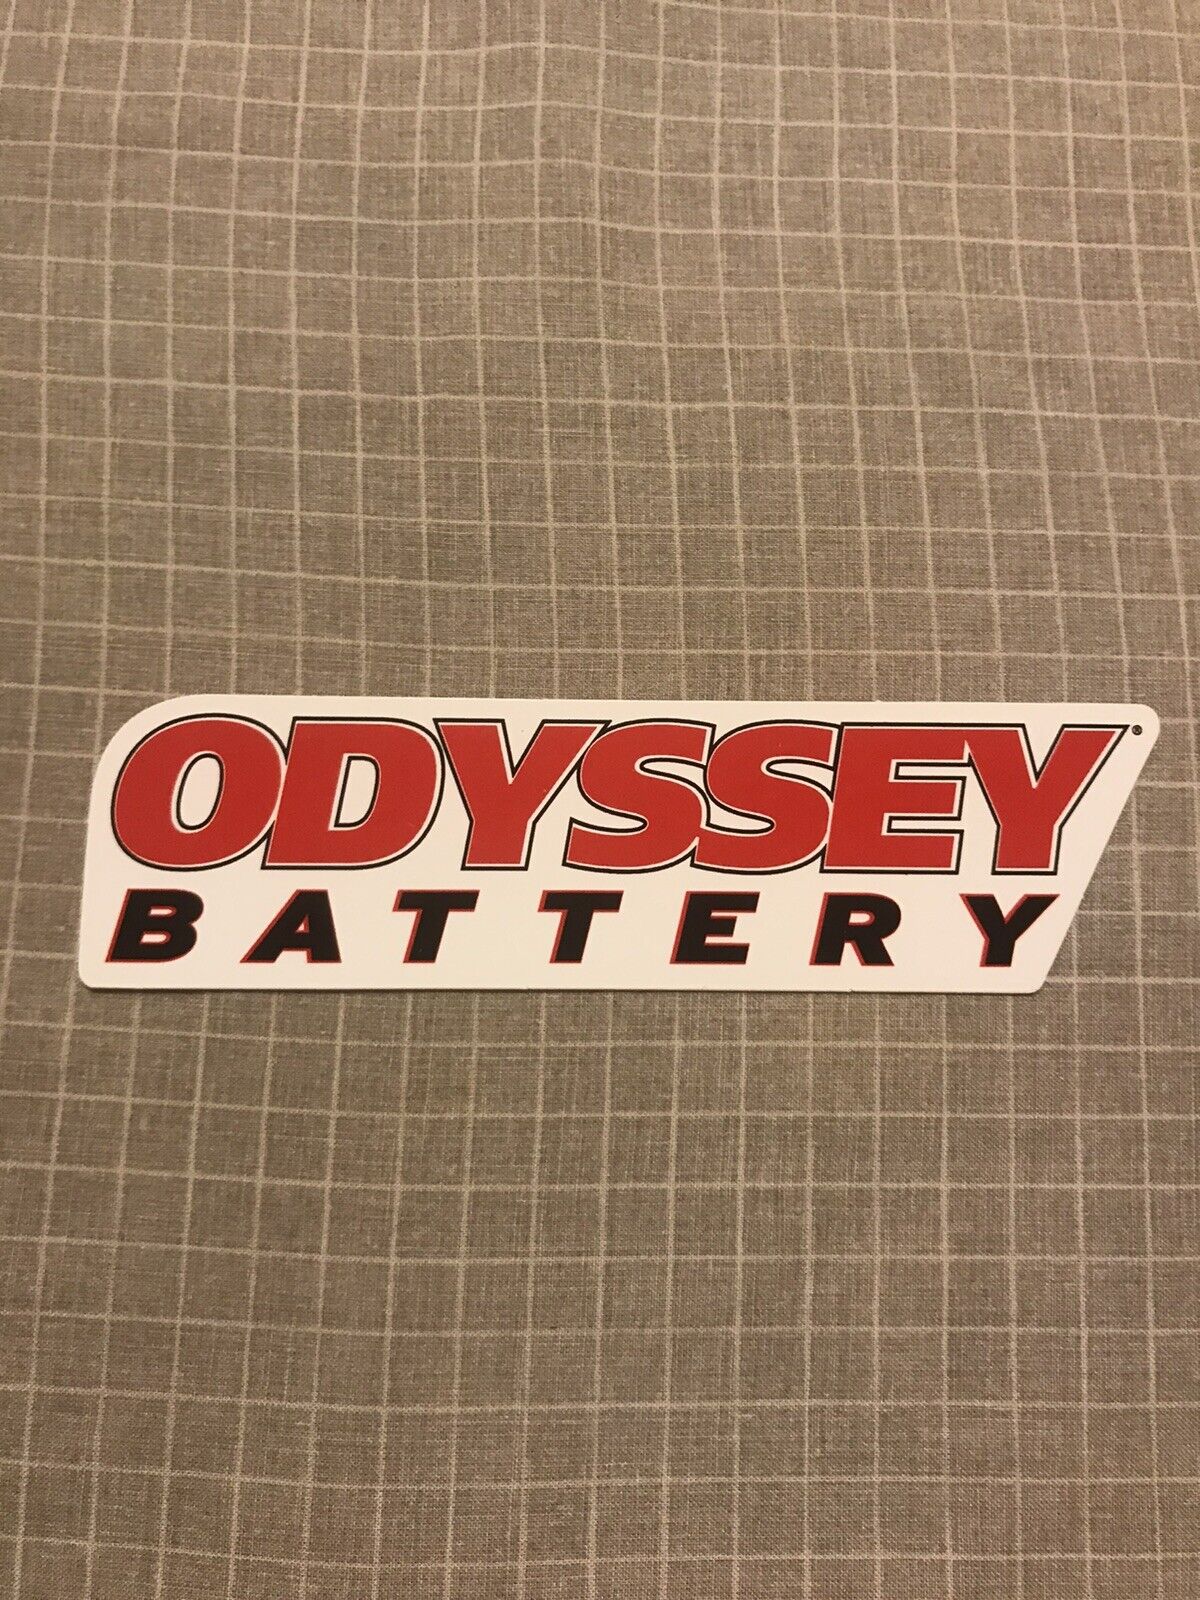 ODYSSEY BATTERY racing sticker decal